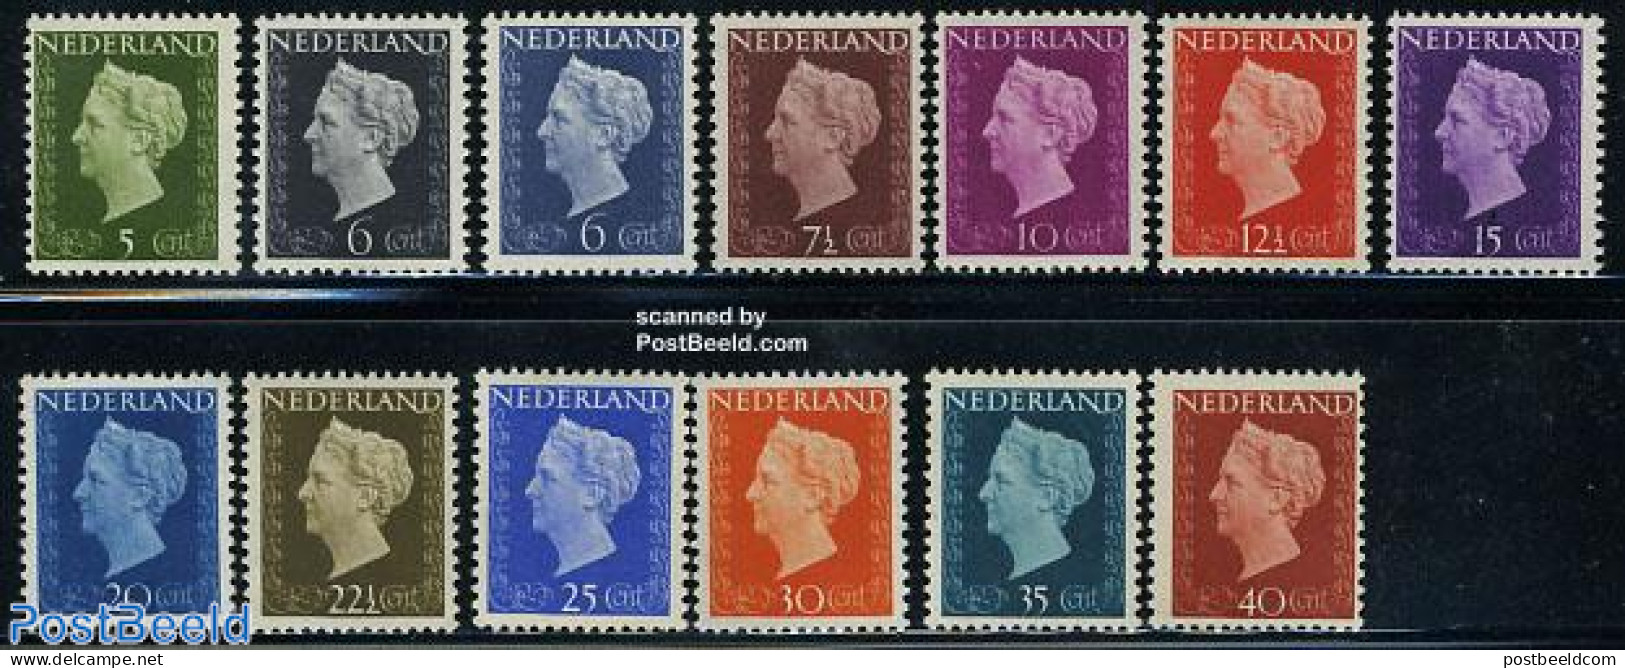 Netherlands 1947 Definitives 13v, Unused (hinged) - Unused Stamps